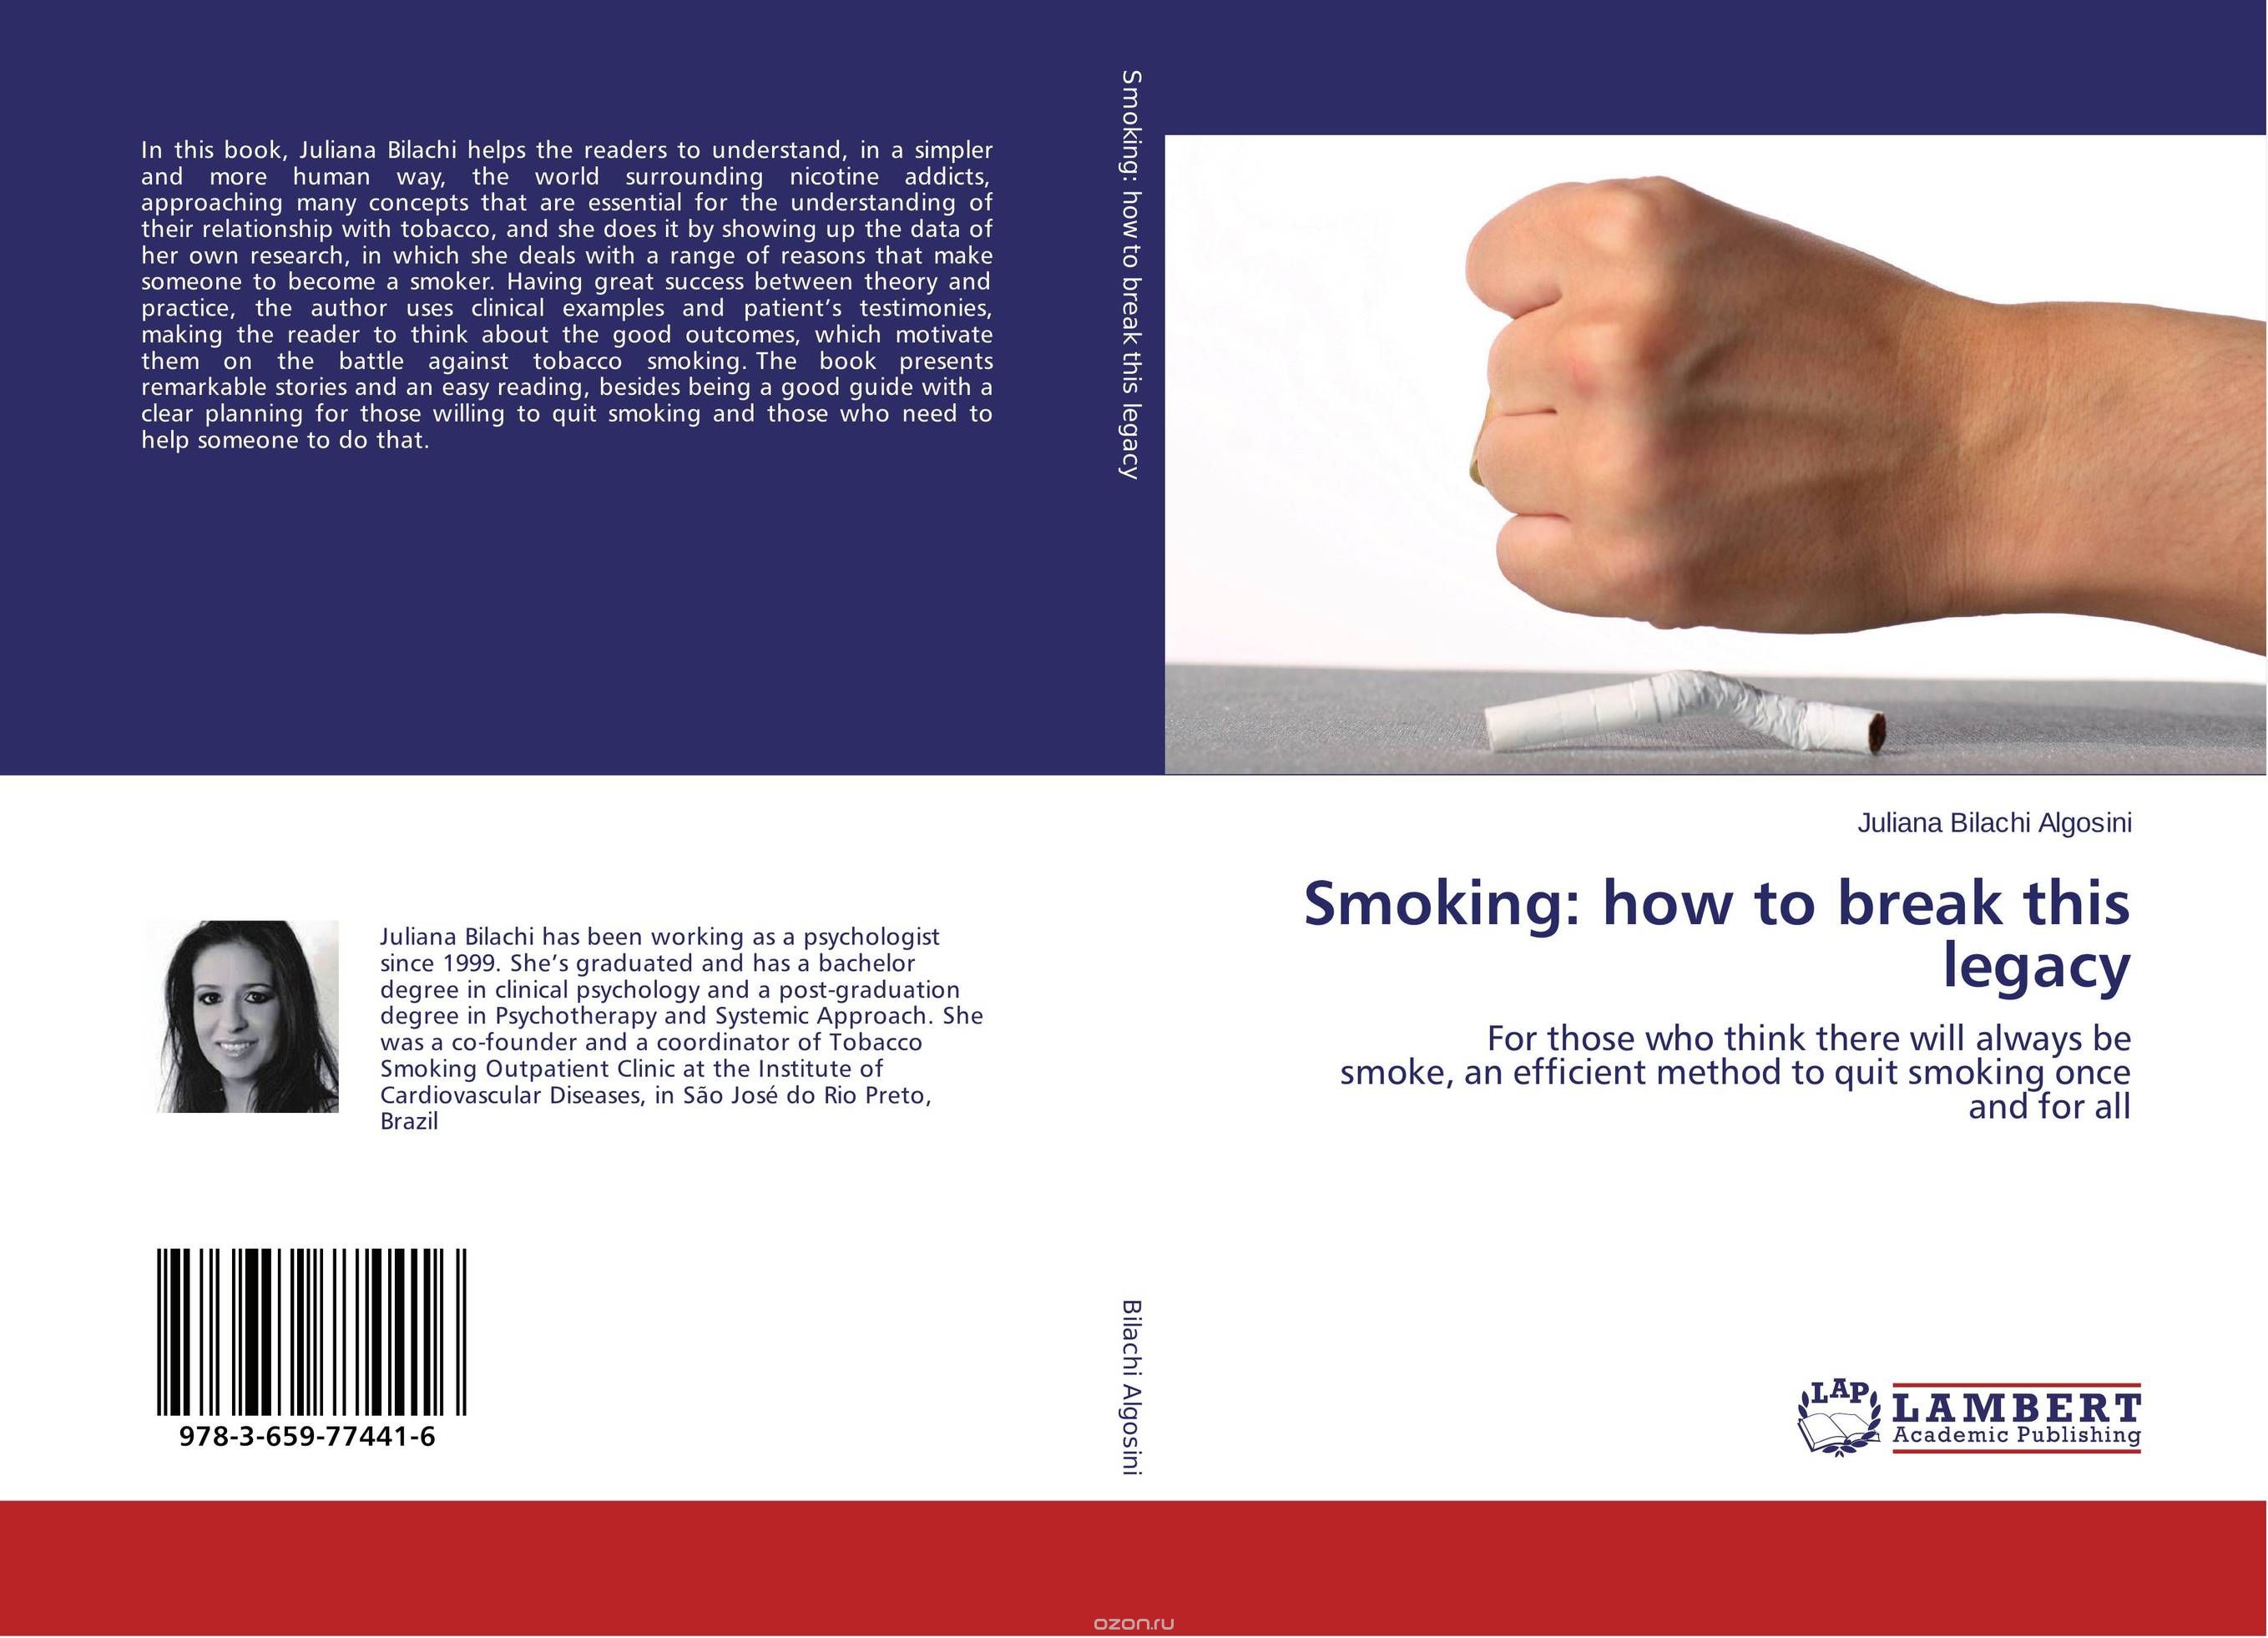 Smoking: how to break this legacy